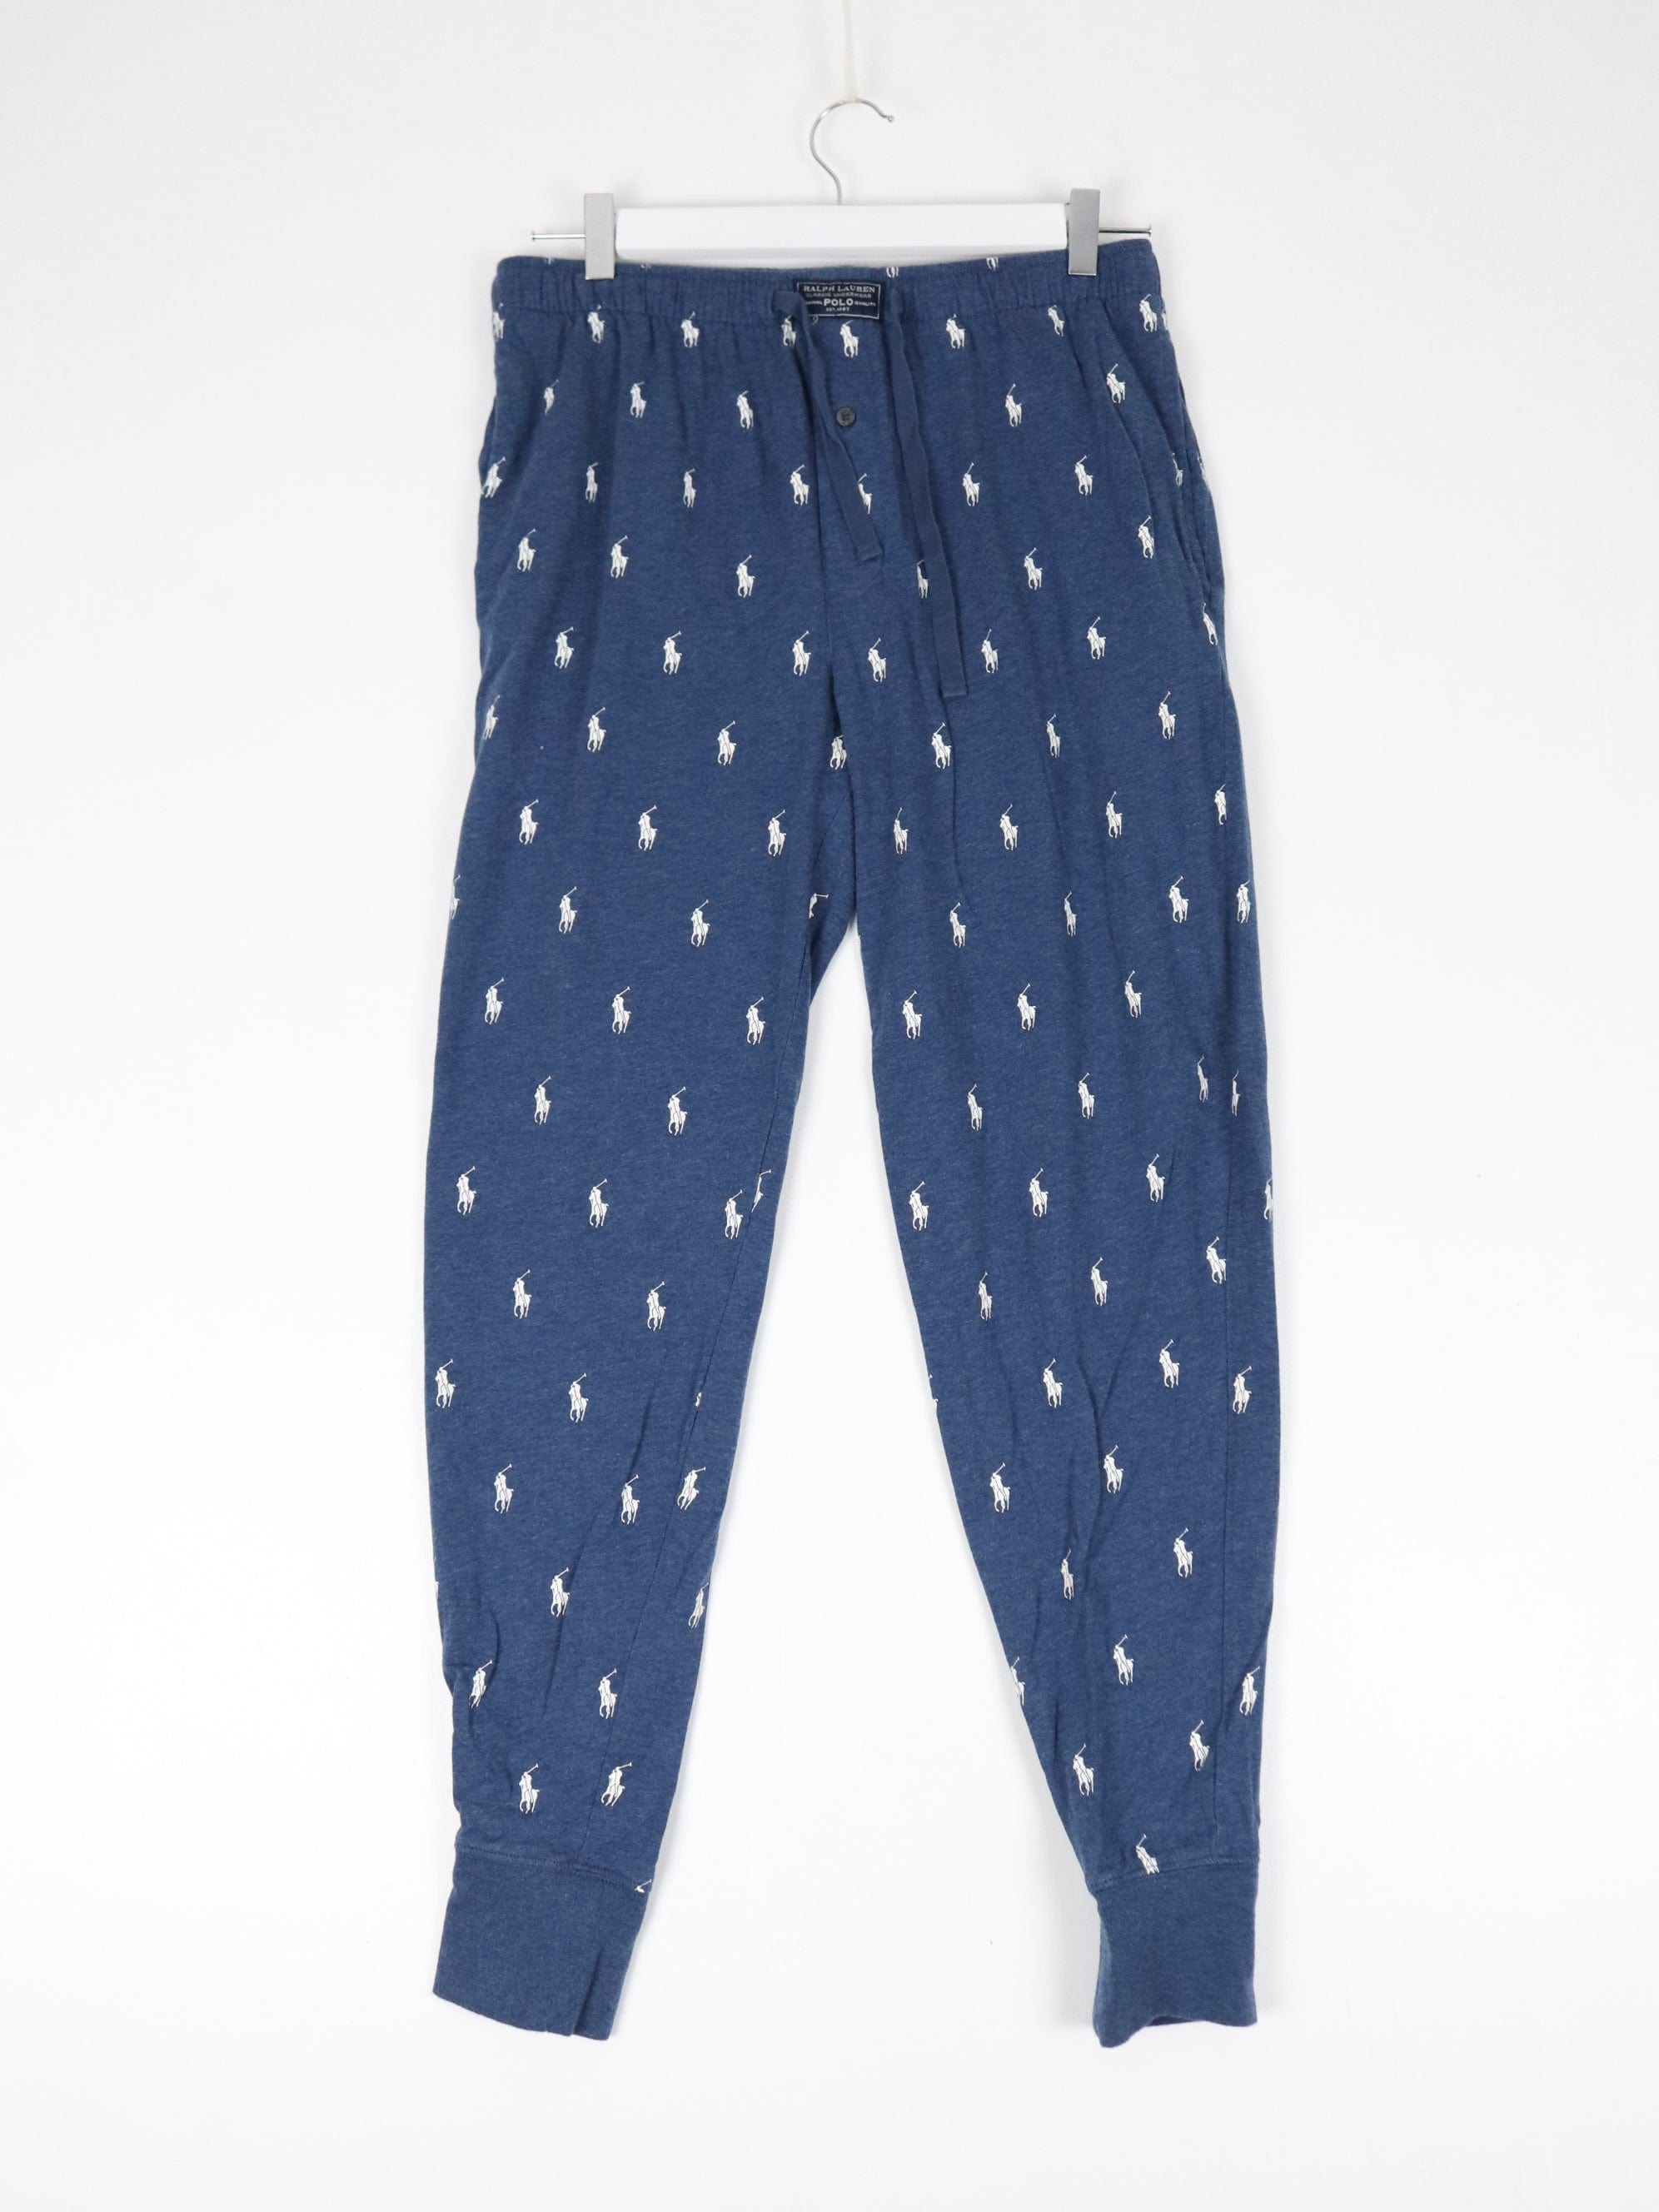 Polo Ralph Lauren Men's All Over Pony Print Pajama Pant Cotton Navy Blue  NWT 3XL